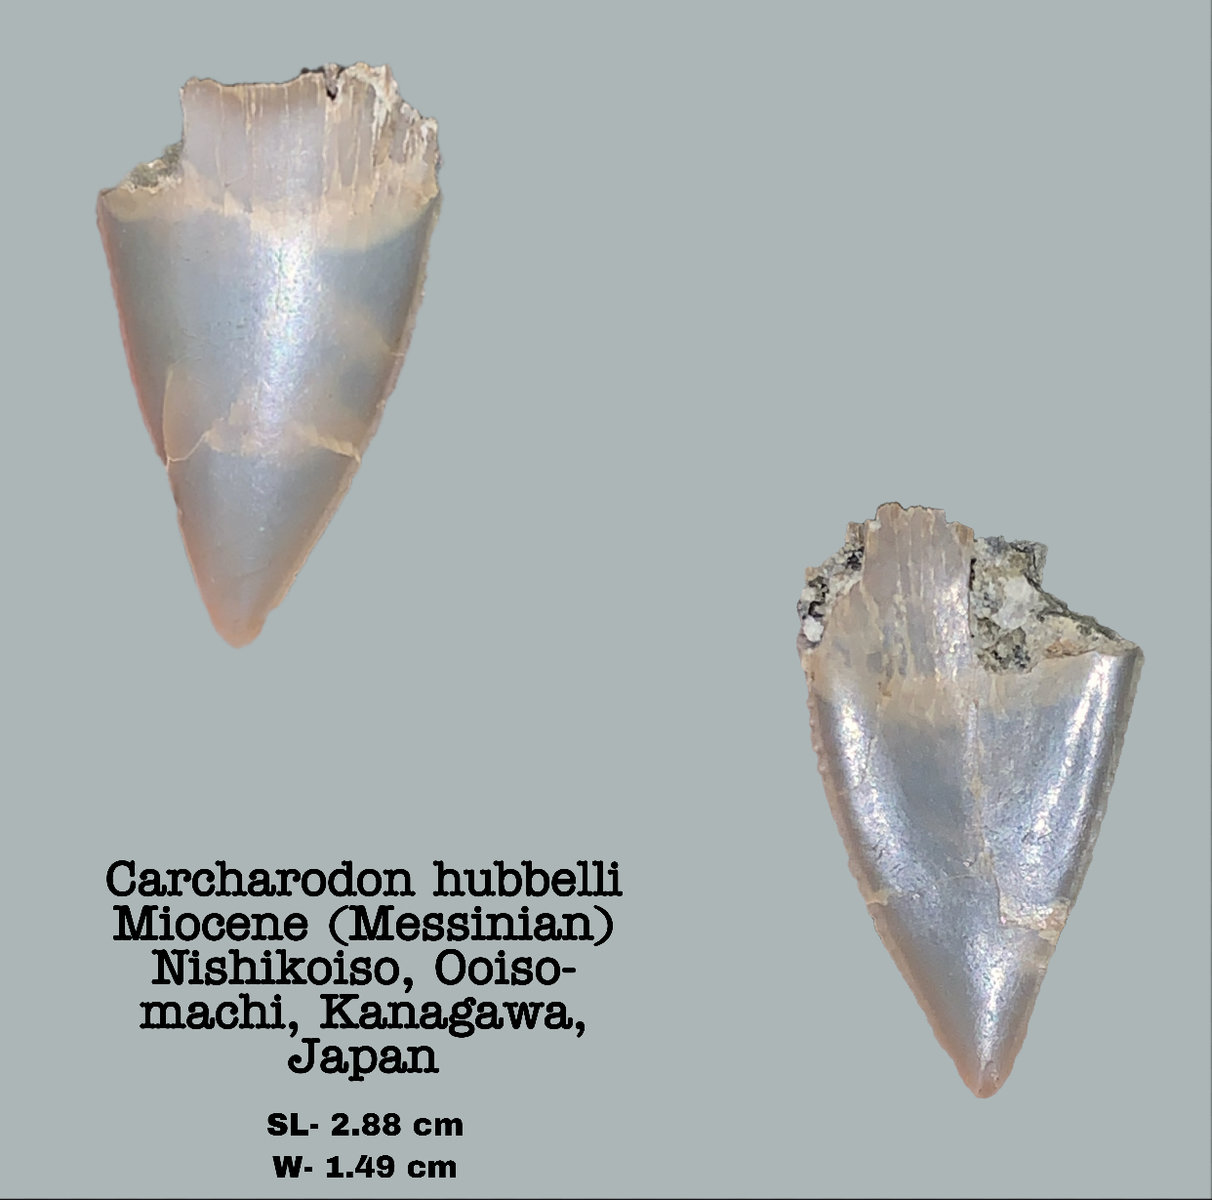 Carcharodon hubbelli (Enamel cone)